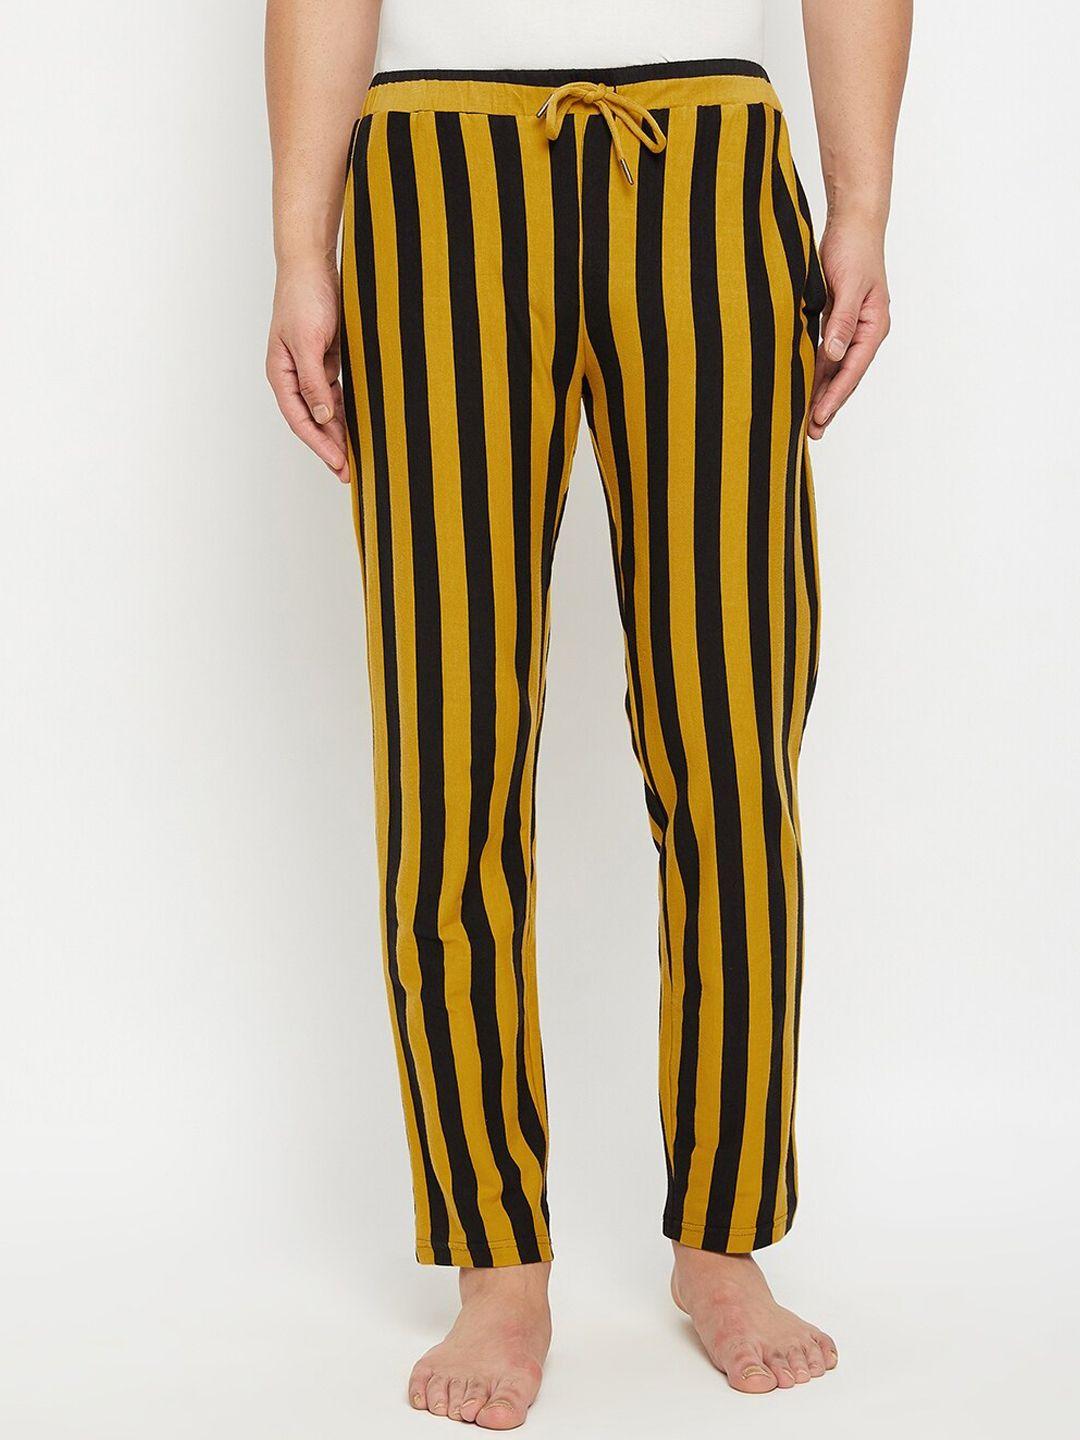 hypernation men yellow and black striped cotton lounge pants